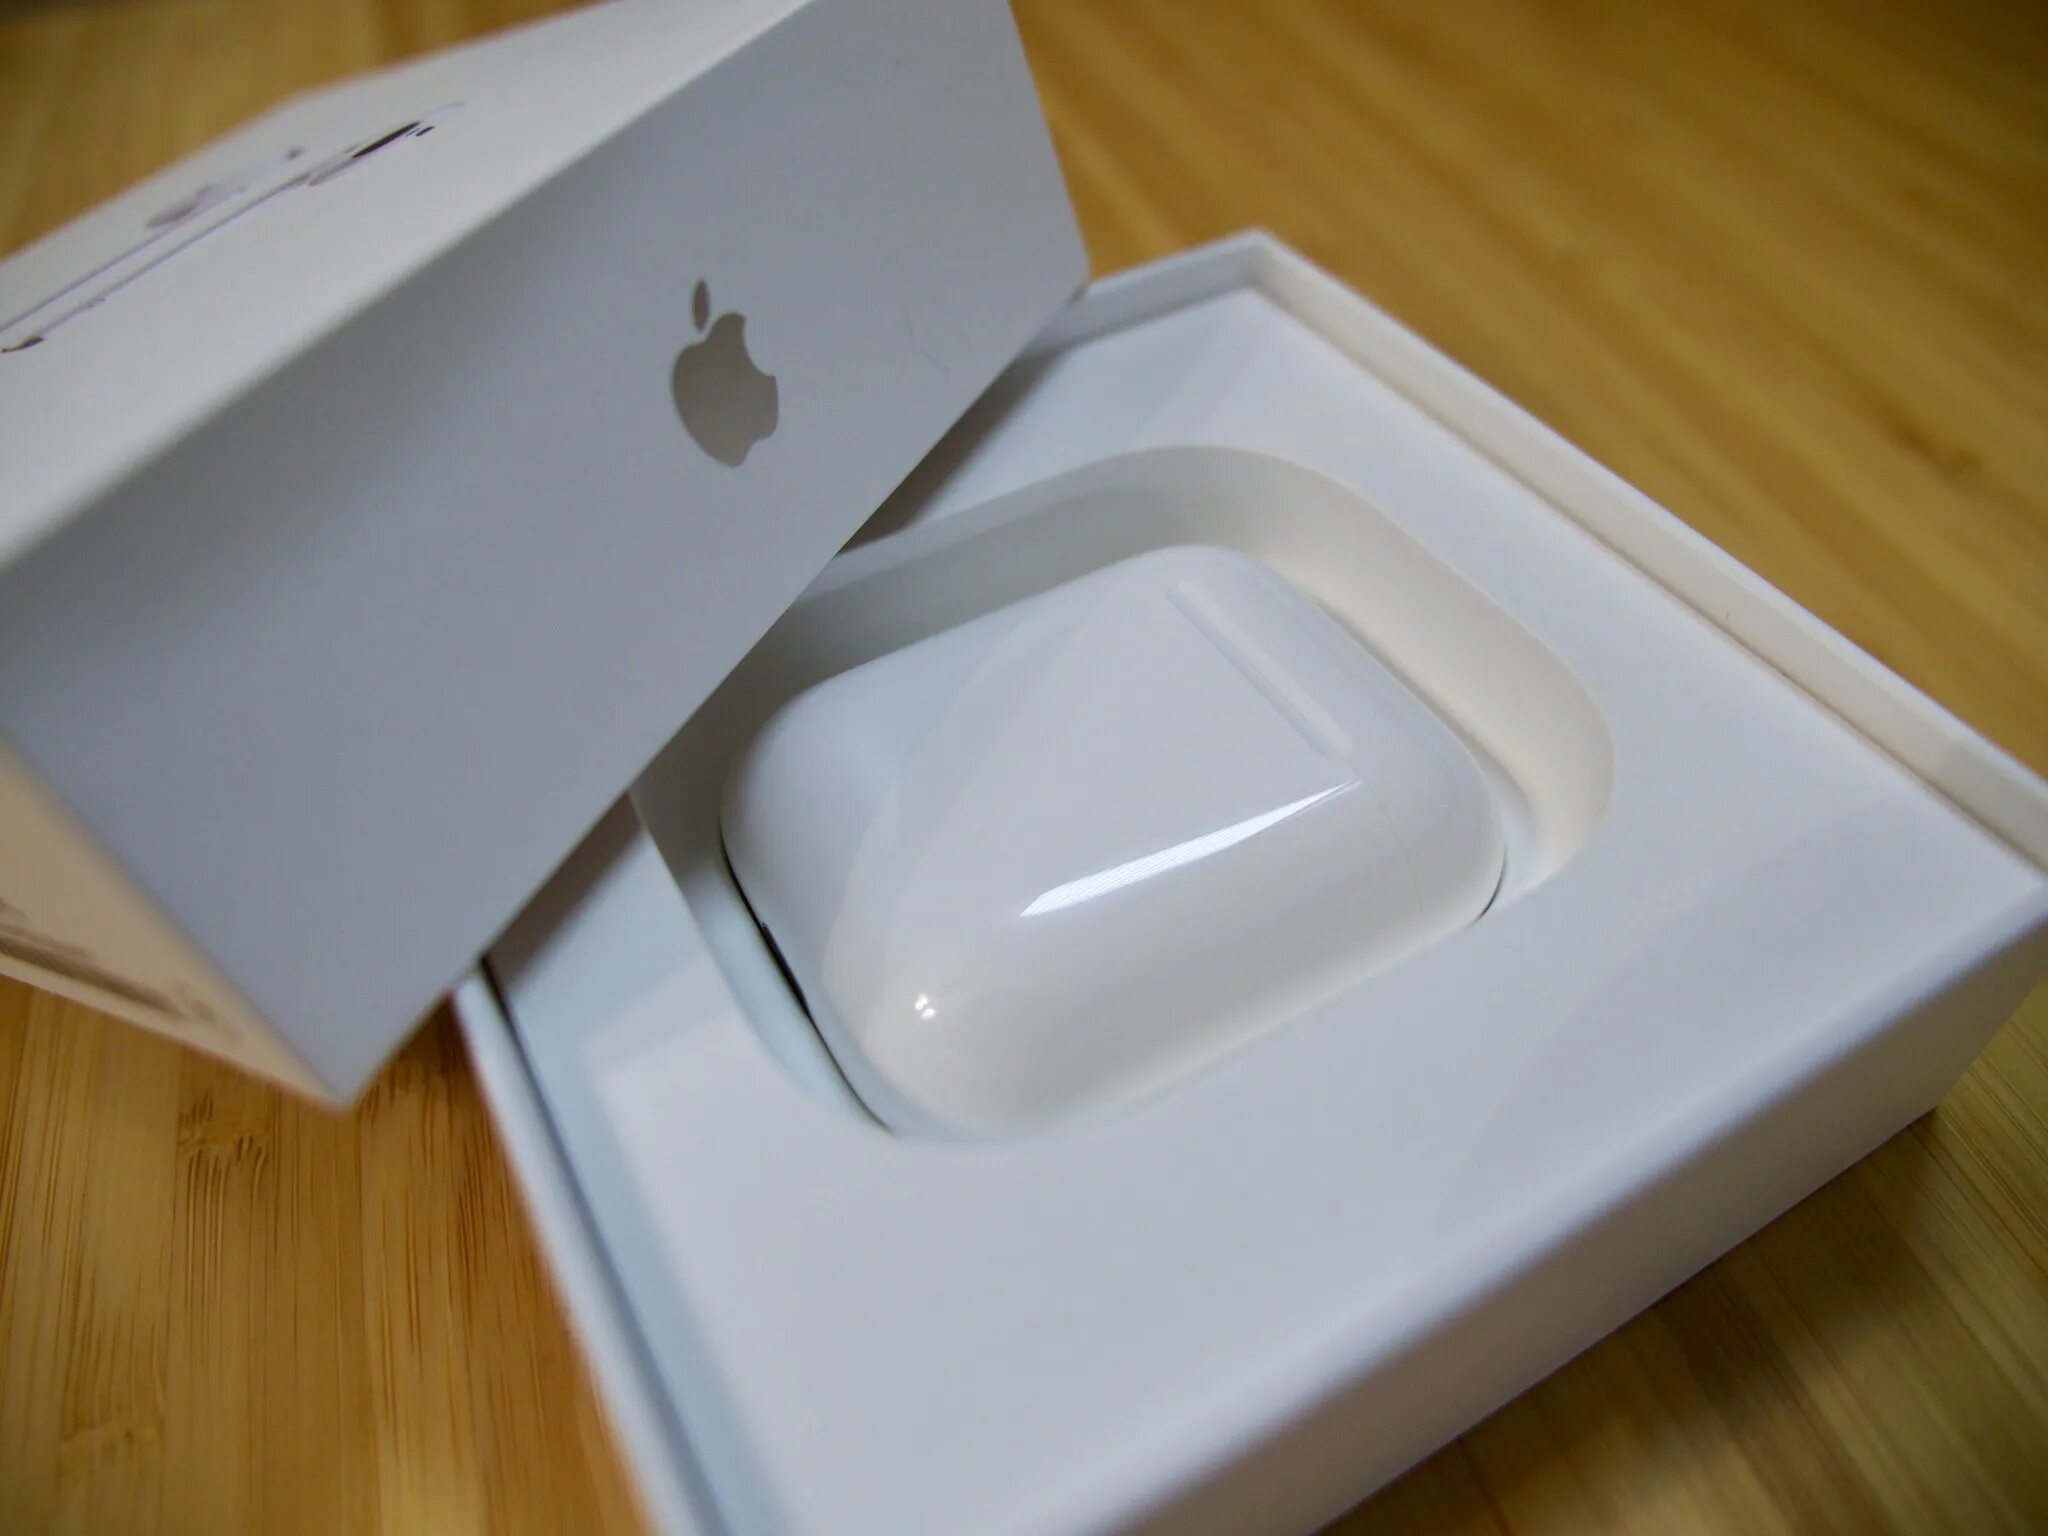 Apple AIRPODS 2 коробка. Apple AIRPODS Pro 2 коробка. Аирподсы эпл. Apple аирподс коробка. Airpods краснодар